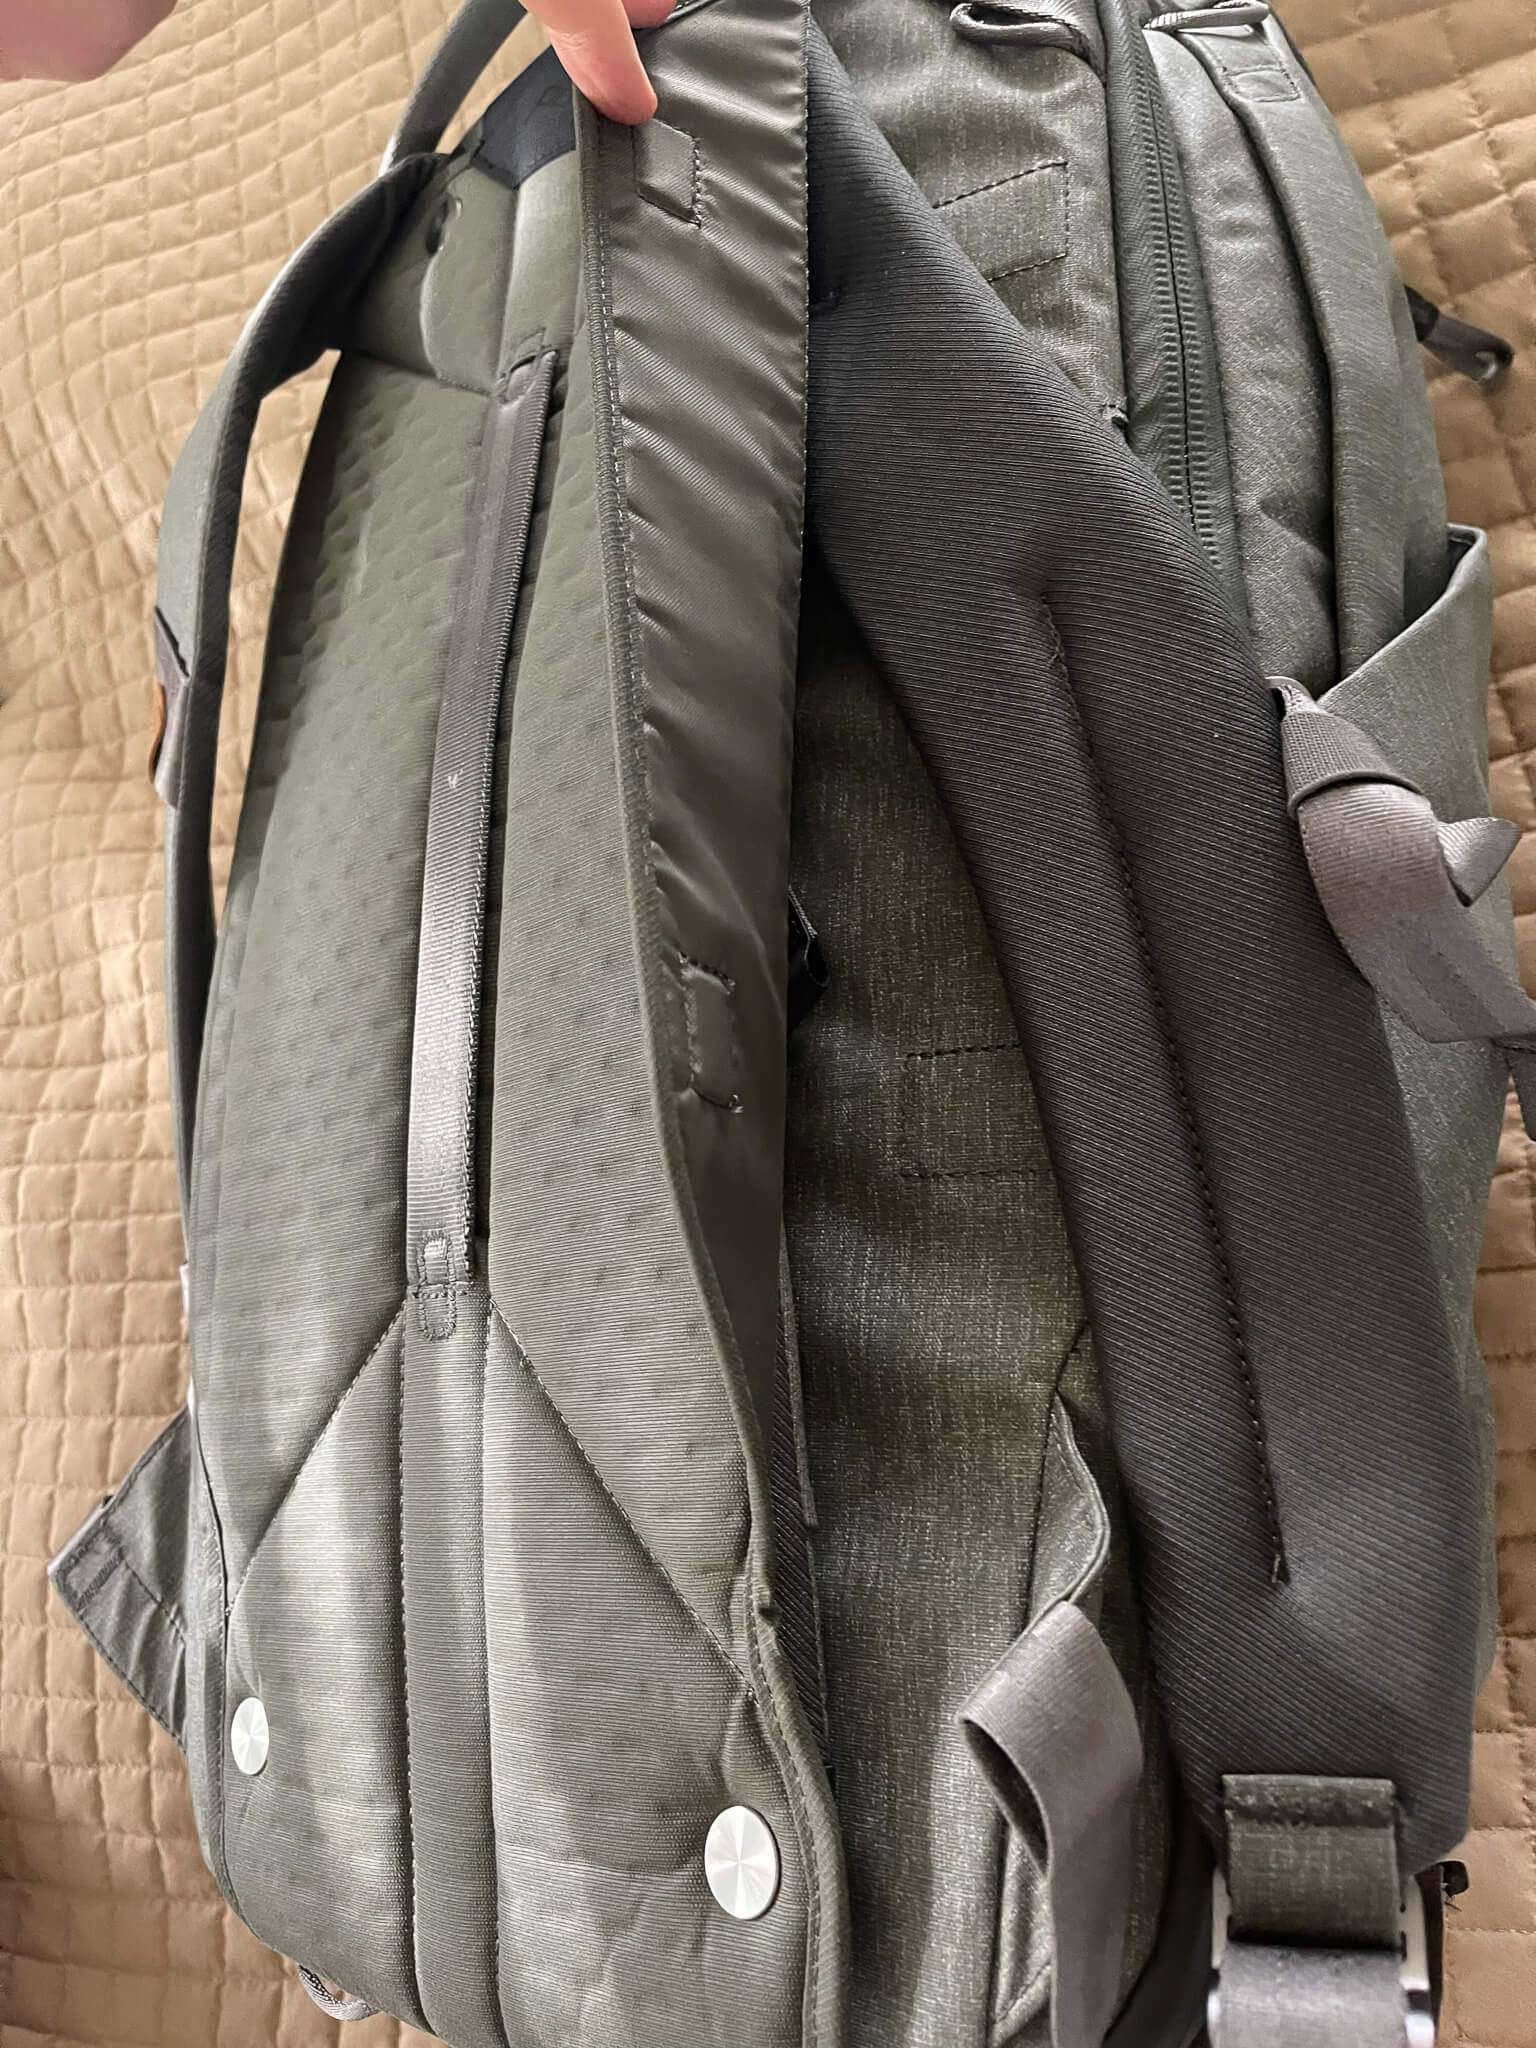 Stowaway straps on the Peak Design Travel Backpack